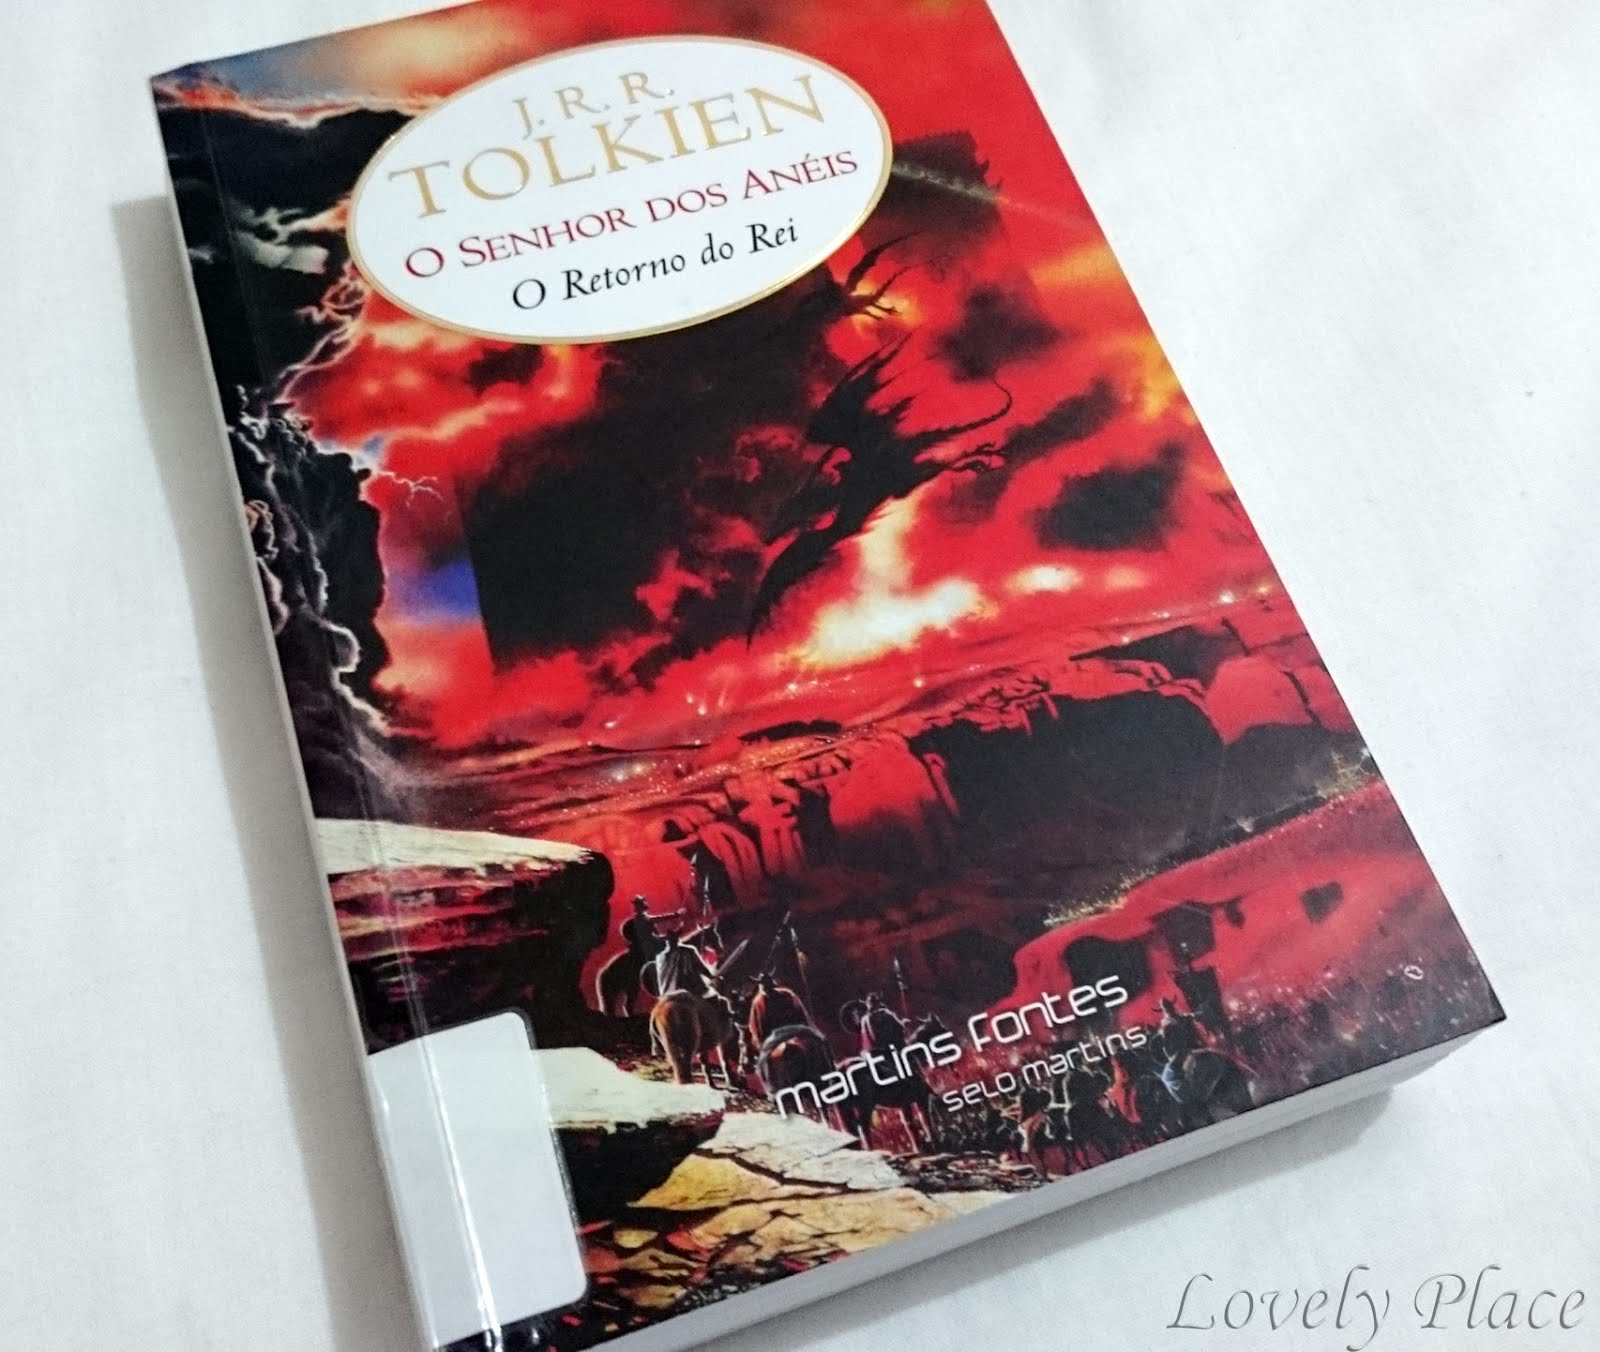 O Retorno do Rei - J. R. R. Tolkien